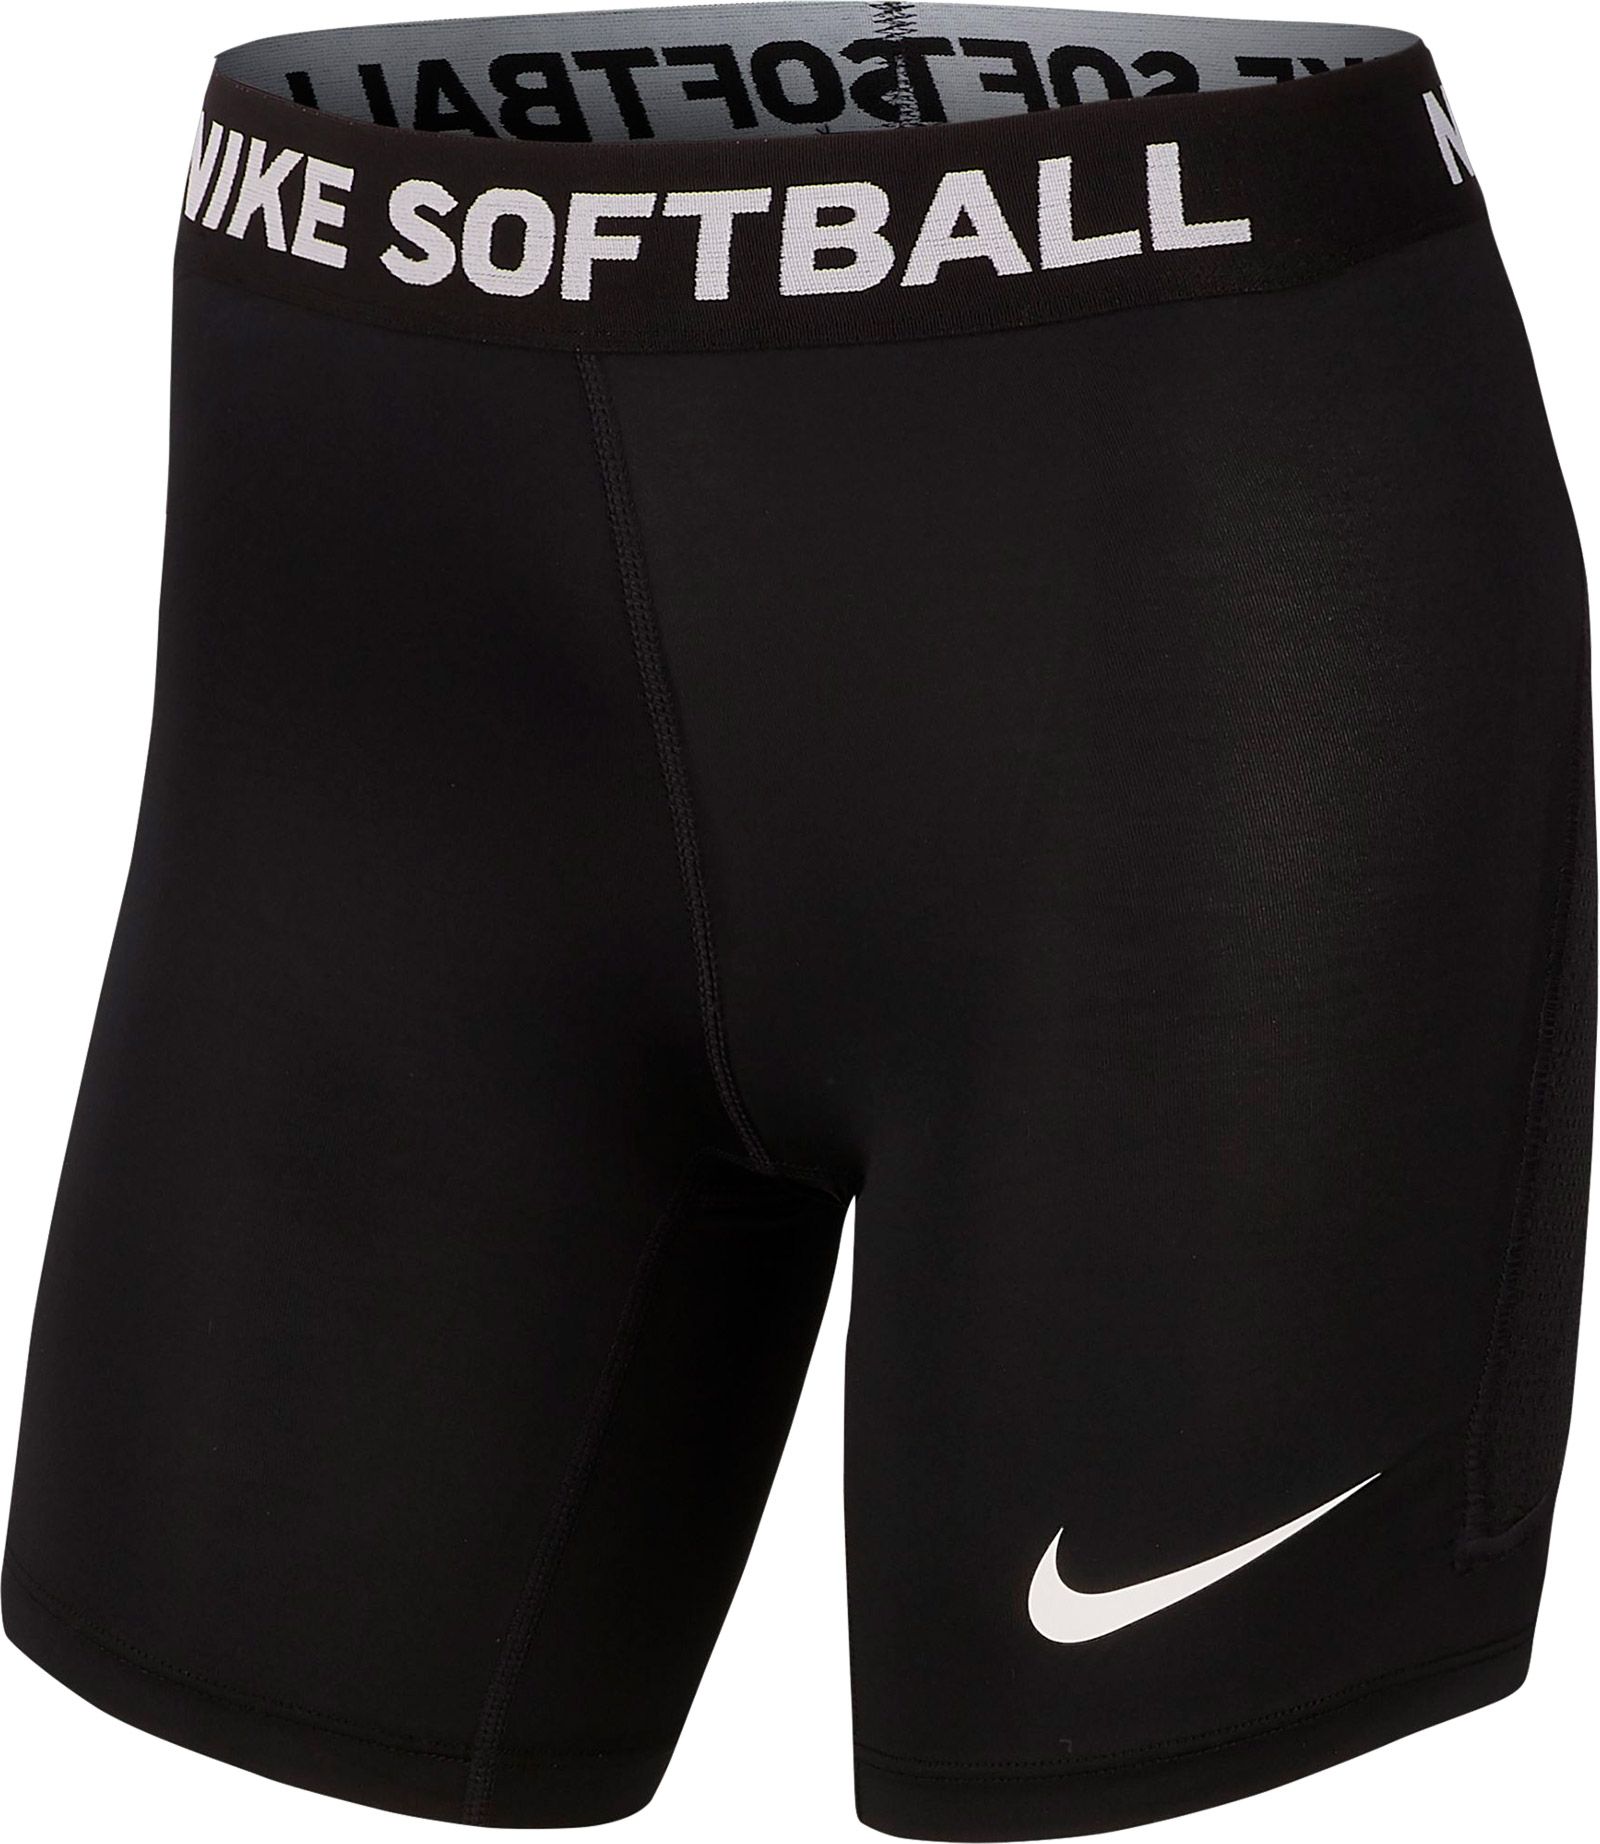 nike softball shorts